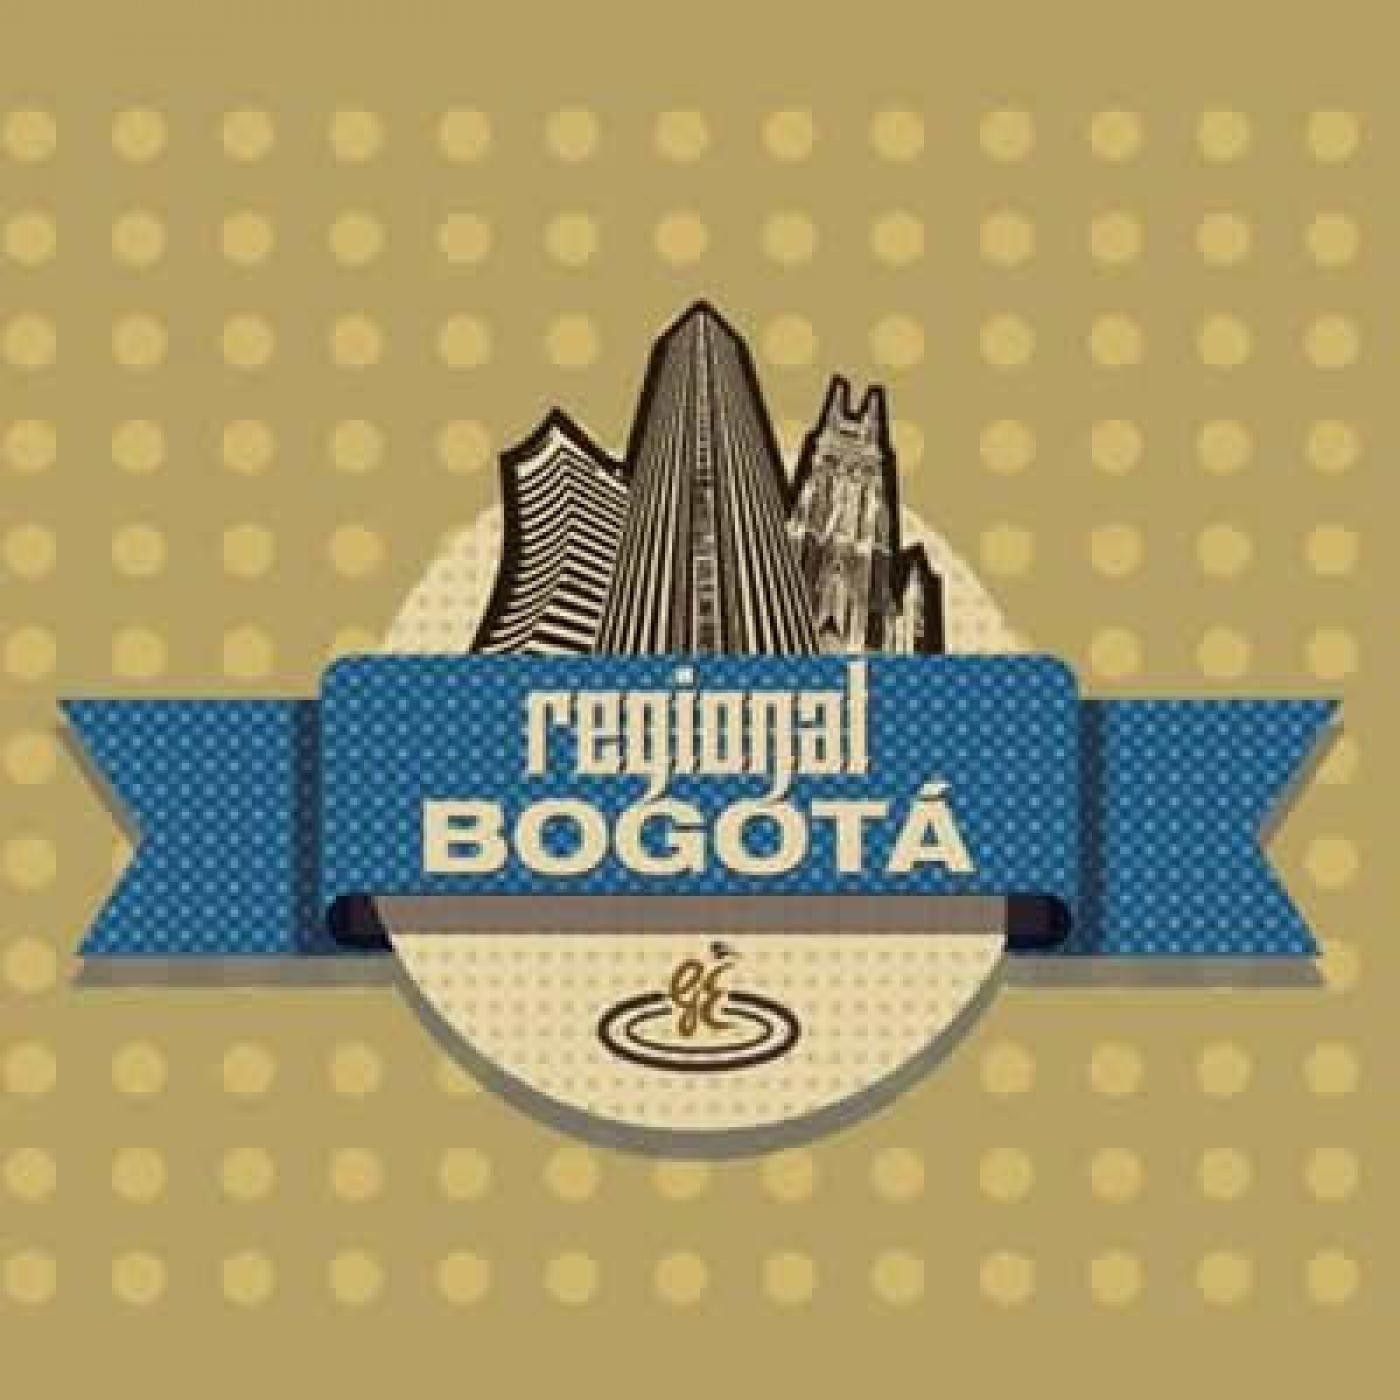 No Te Rindas - Regional Bogota 2016